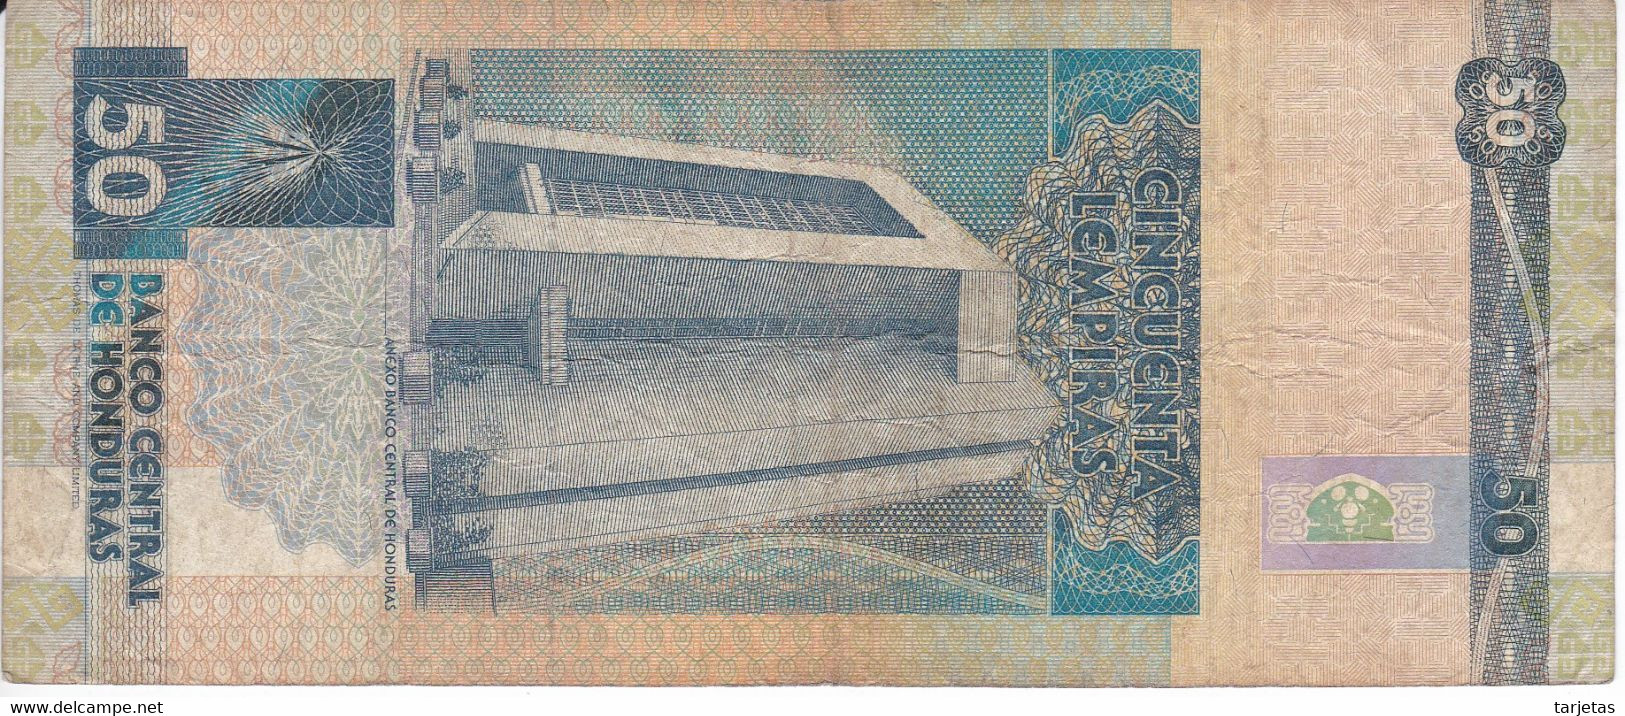 BILLETE DE HONDURAS DE 50 LEMPIRAS AÑO 1994 (BANKNOTE) - Honduras